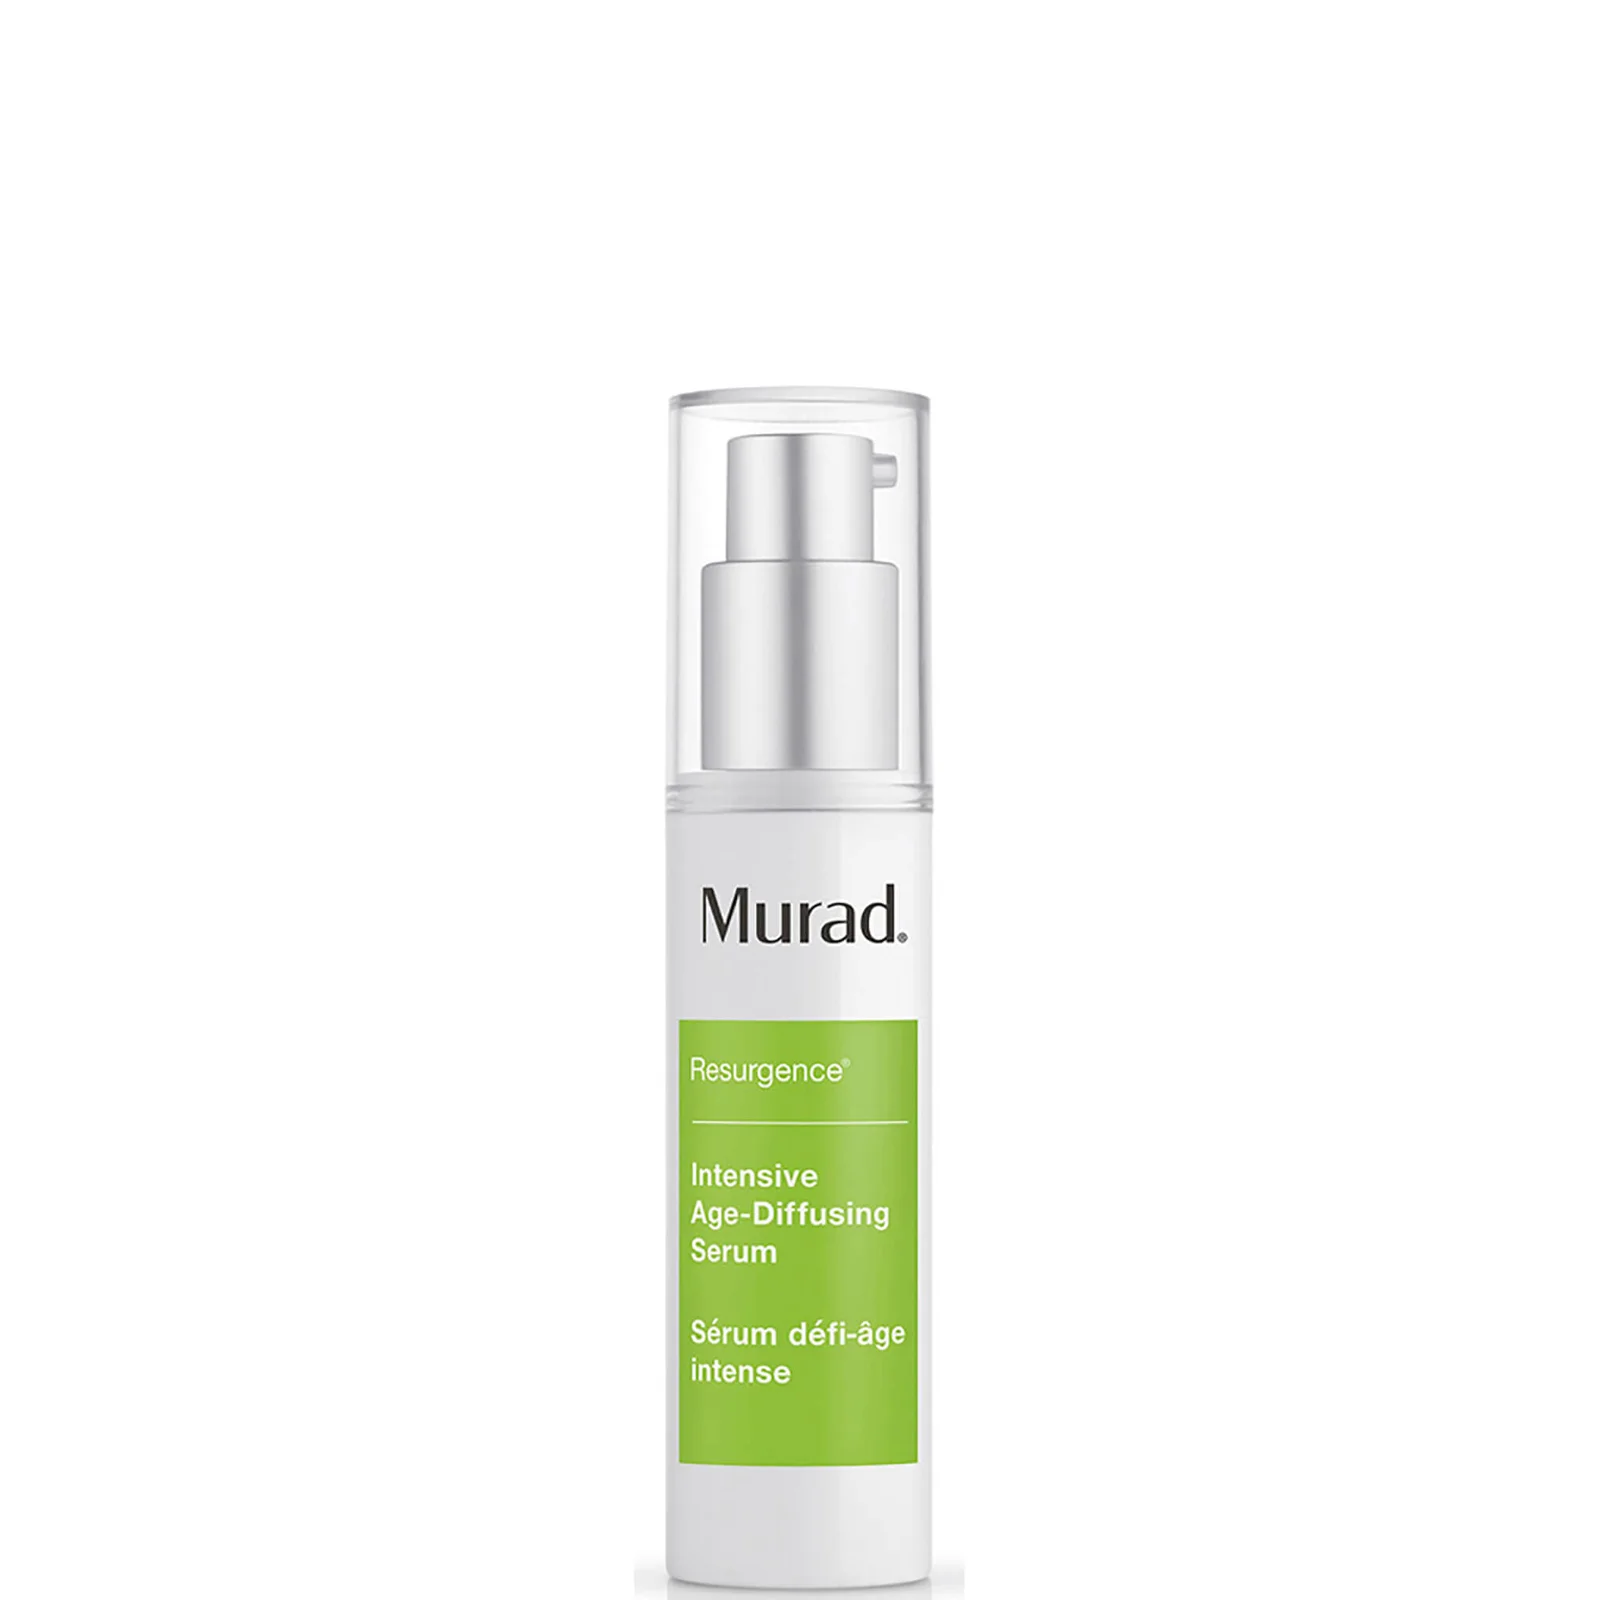 Murad Intensive Age-Diffusing Serum 30ml Image 1